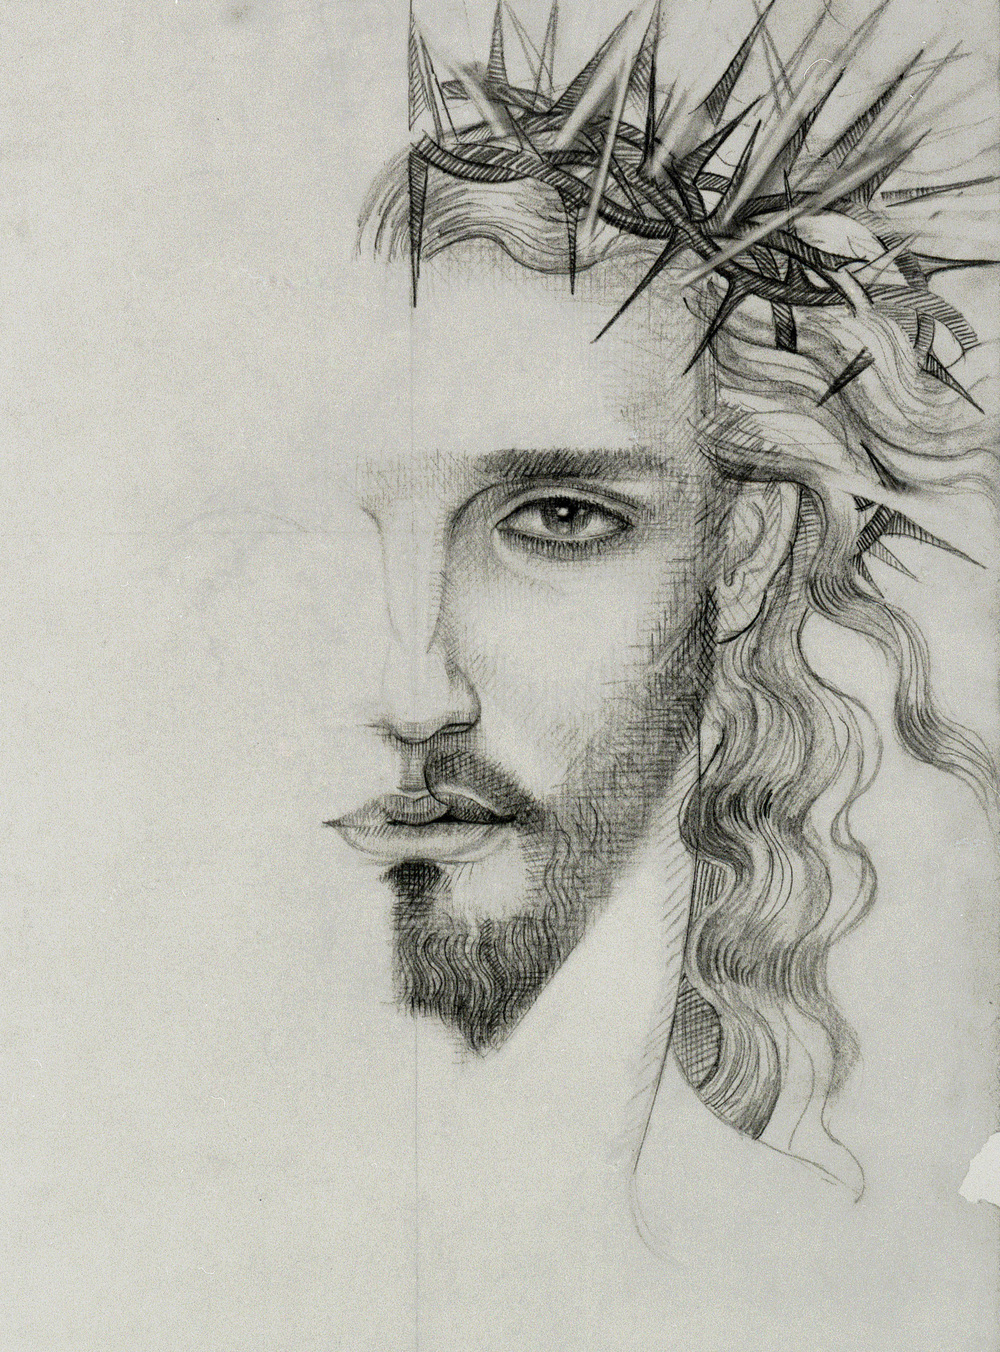 "Al Parker/Jesus" by Mel Odom